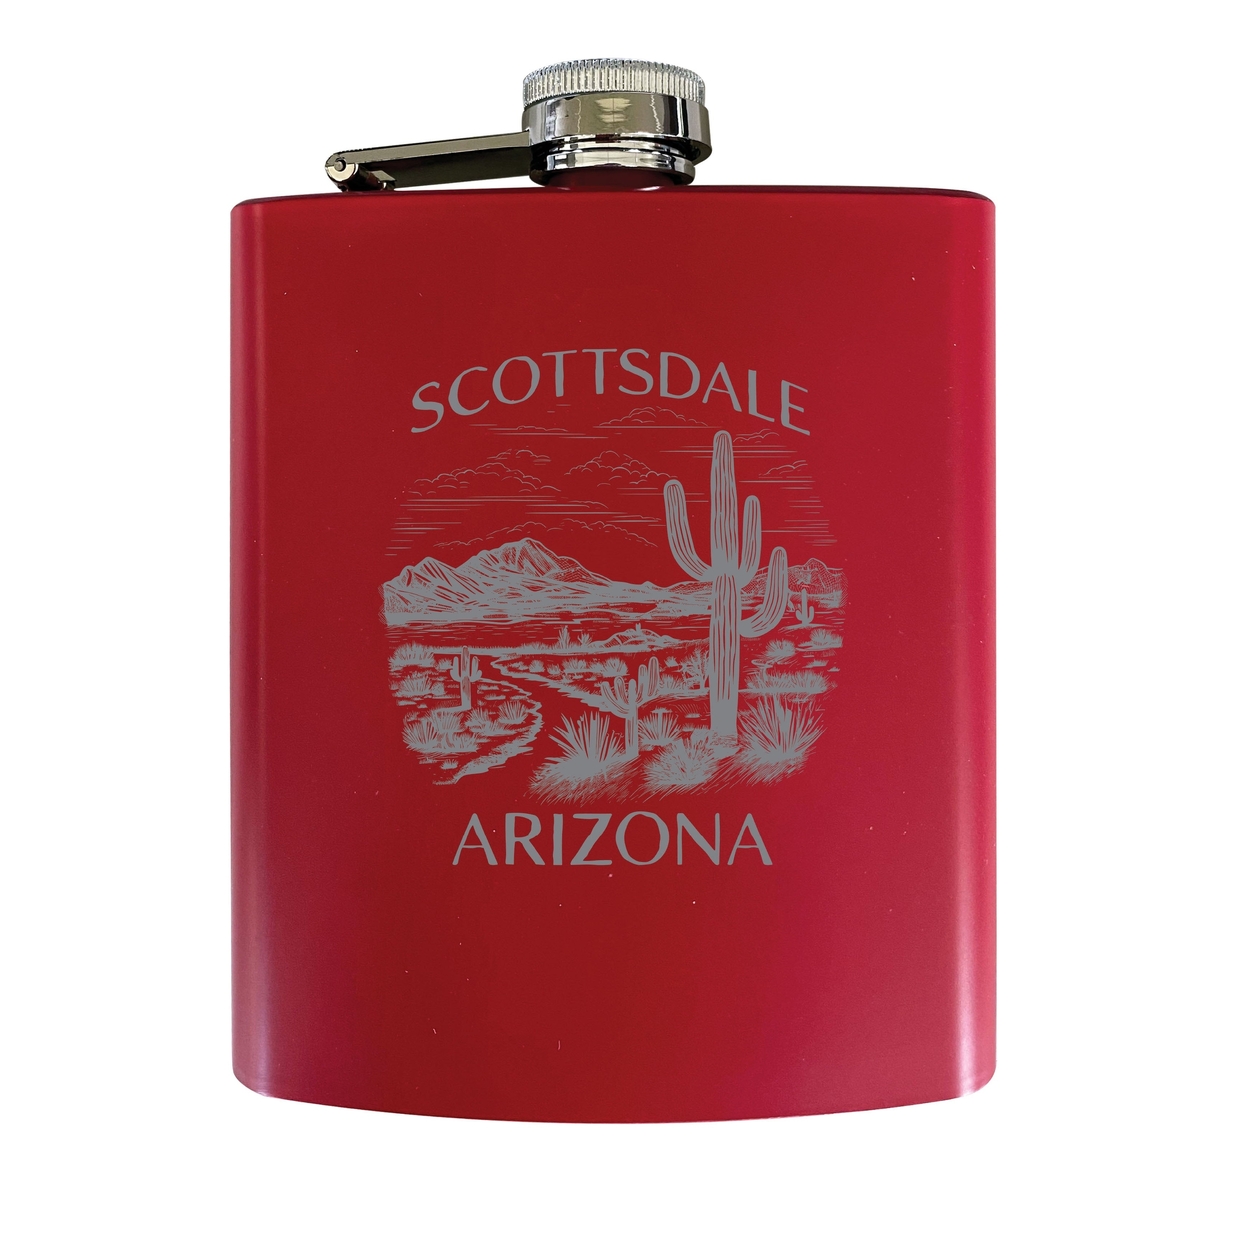 Scottsdale Arizona Souvenir 7 Oz Engraved Steel Flask Matte Finish - Black,,4-Pack